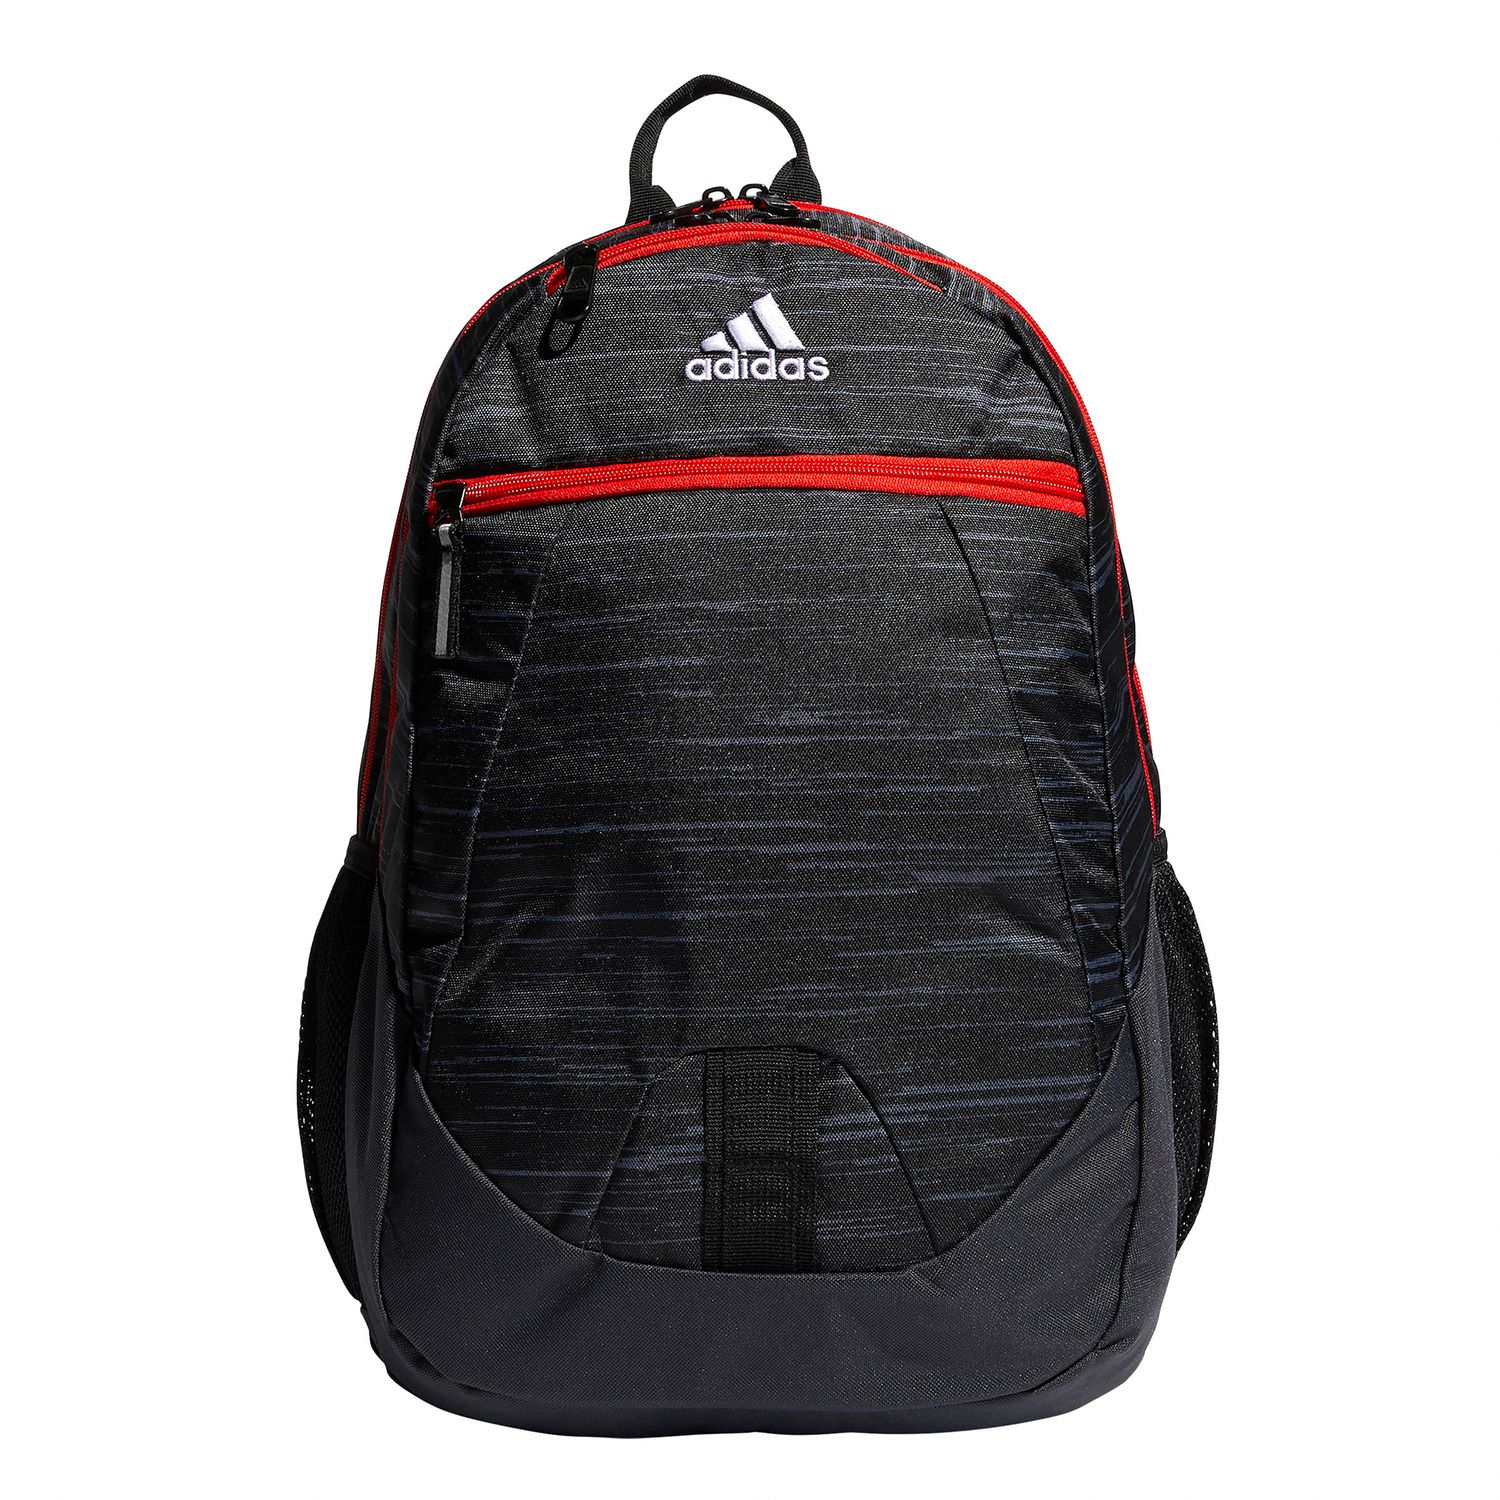 foundation v backpack adidas